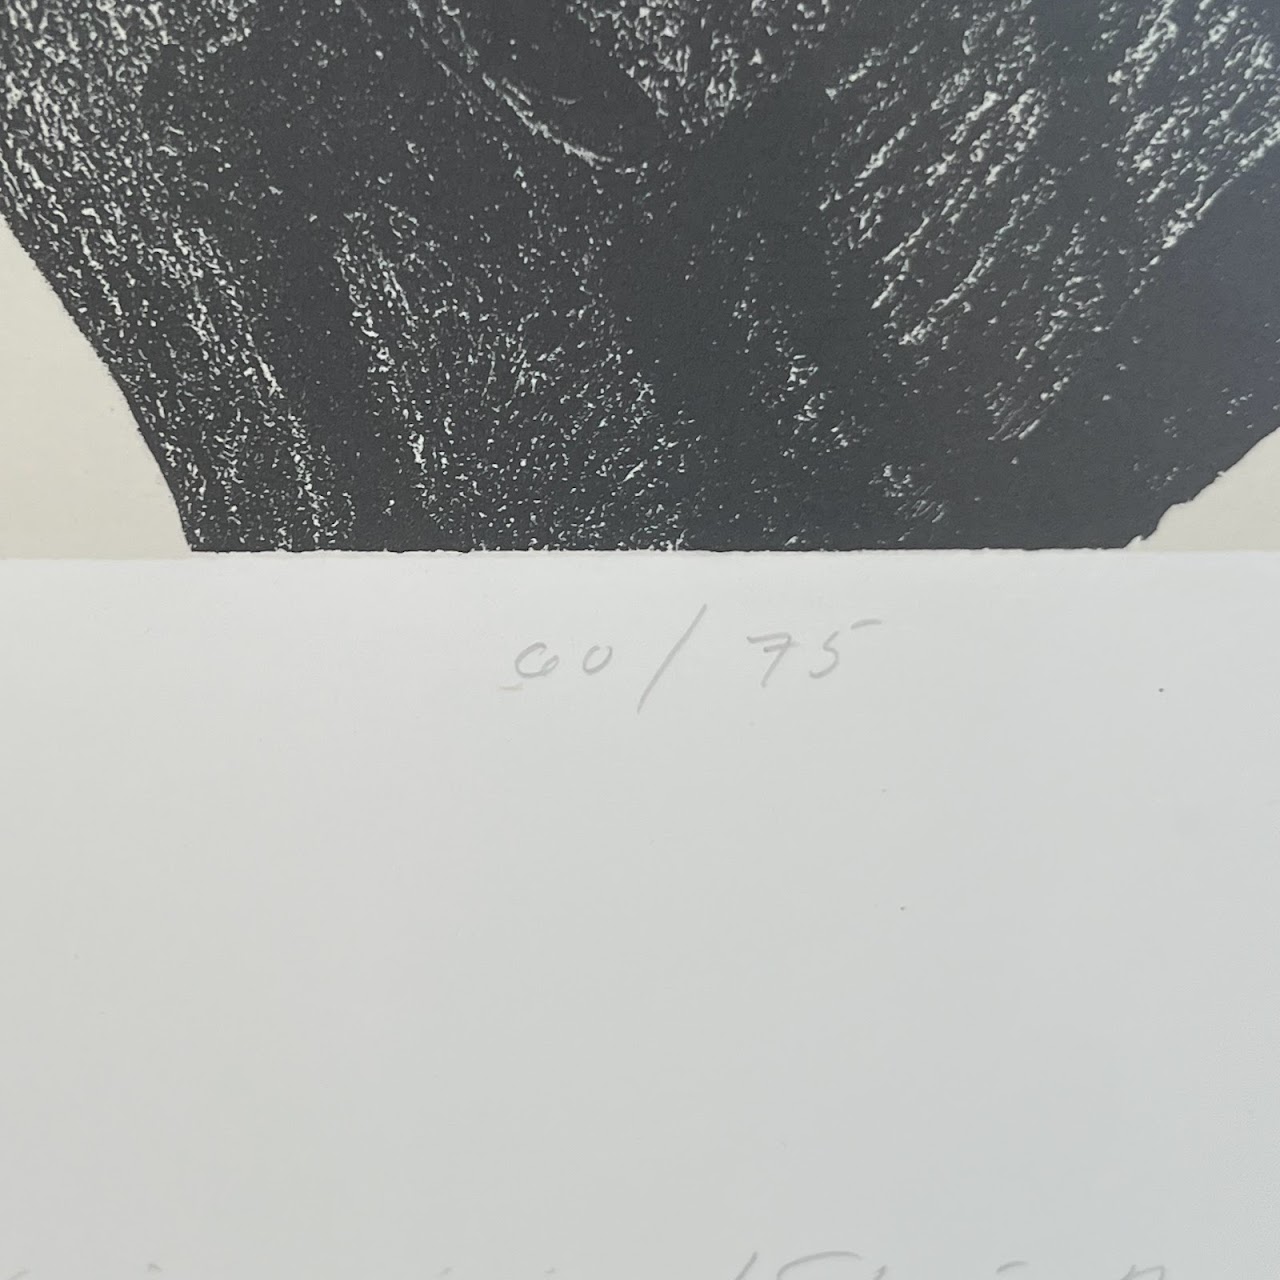 Georgia Marsh 'Adult Epigram' Signed Lithograph, 1990